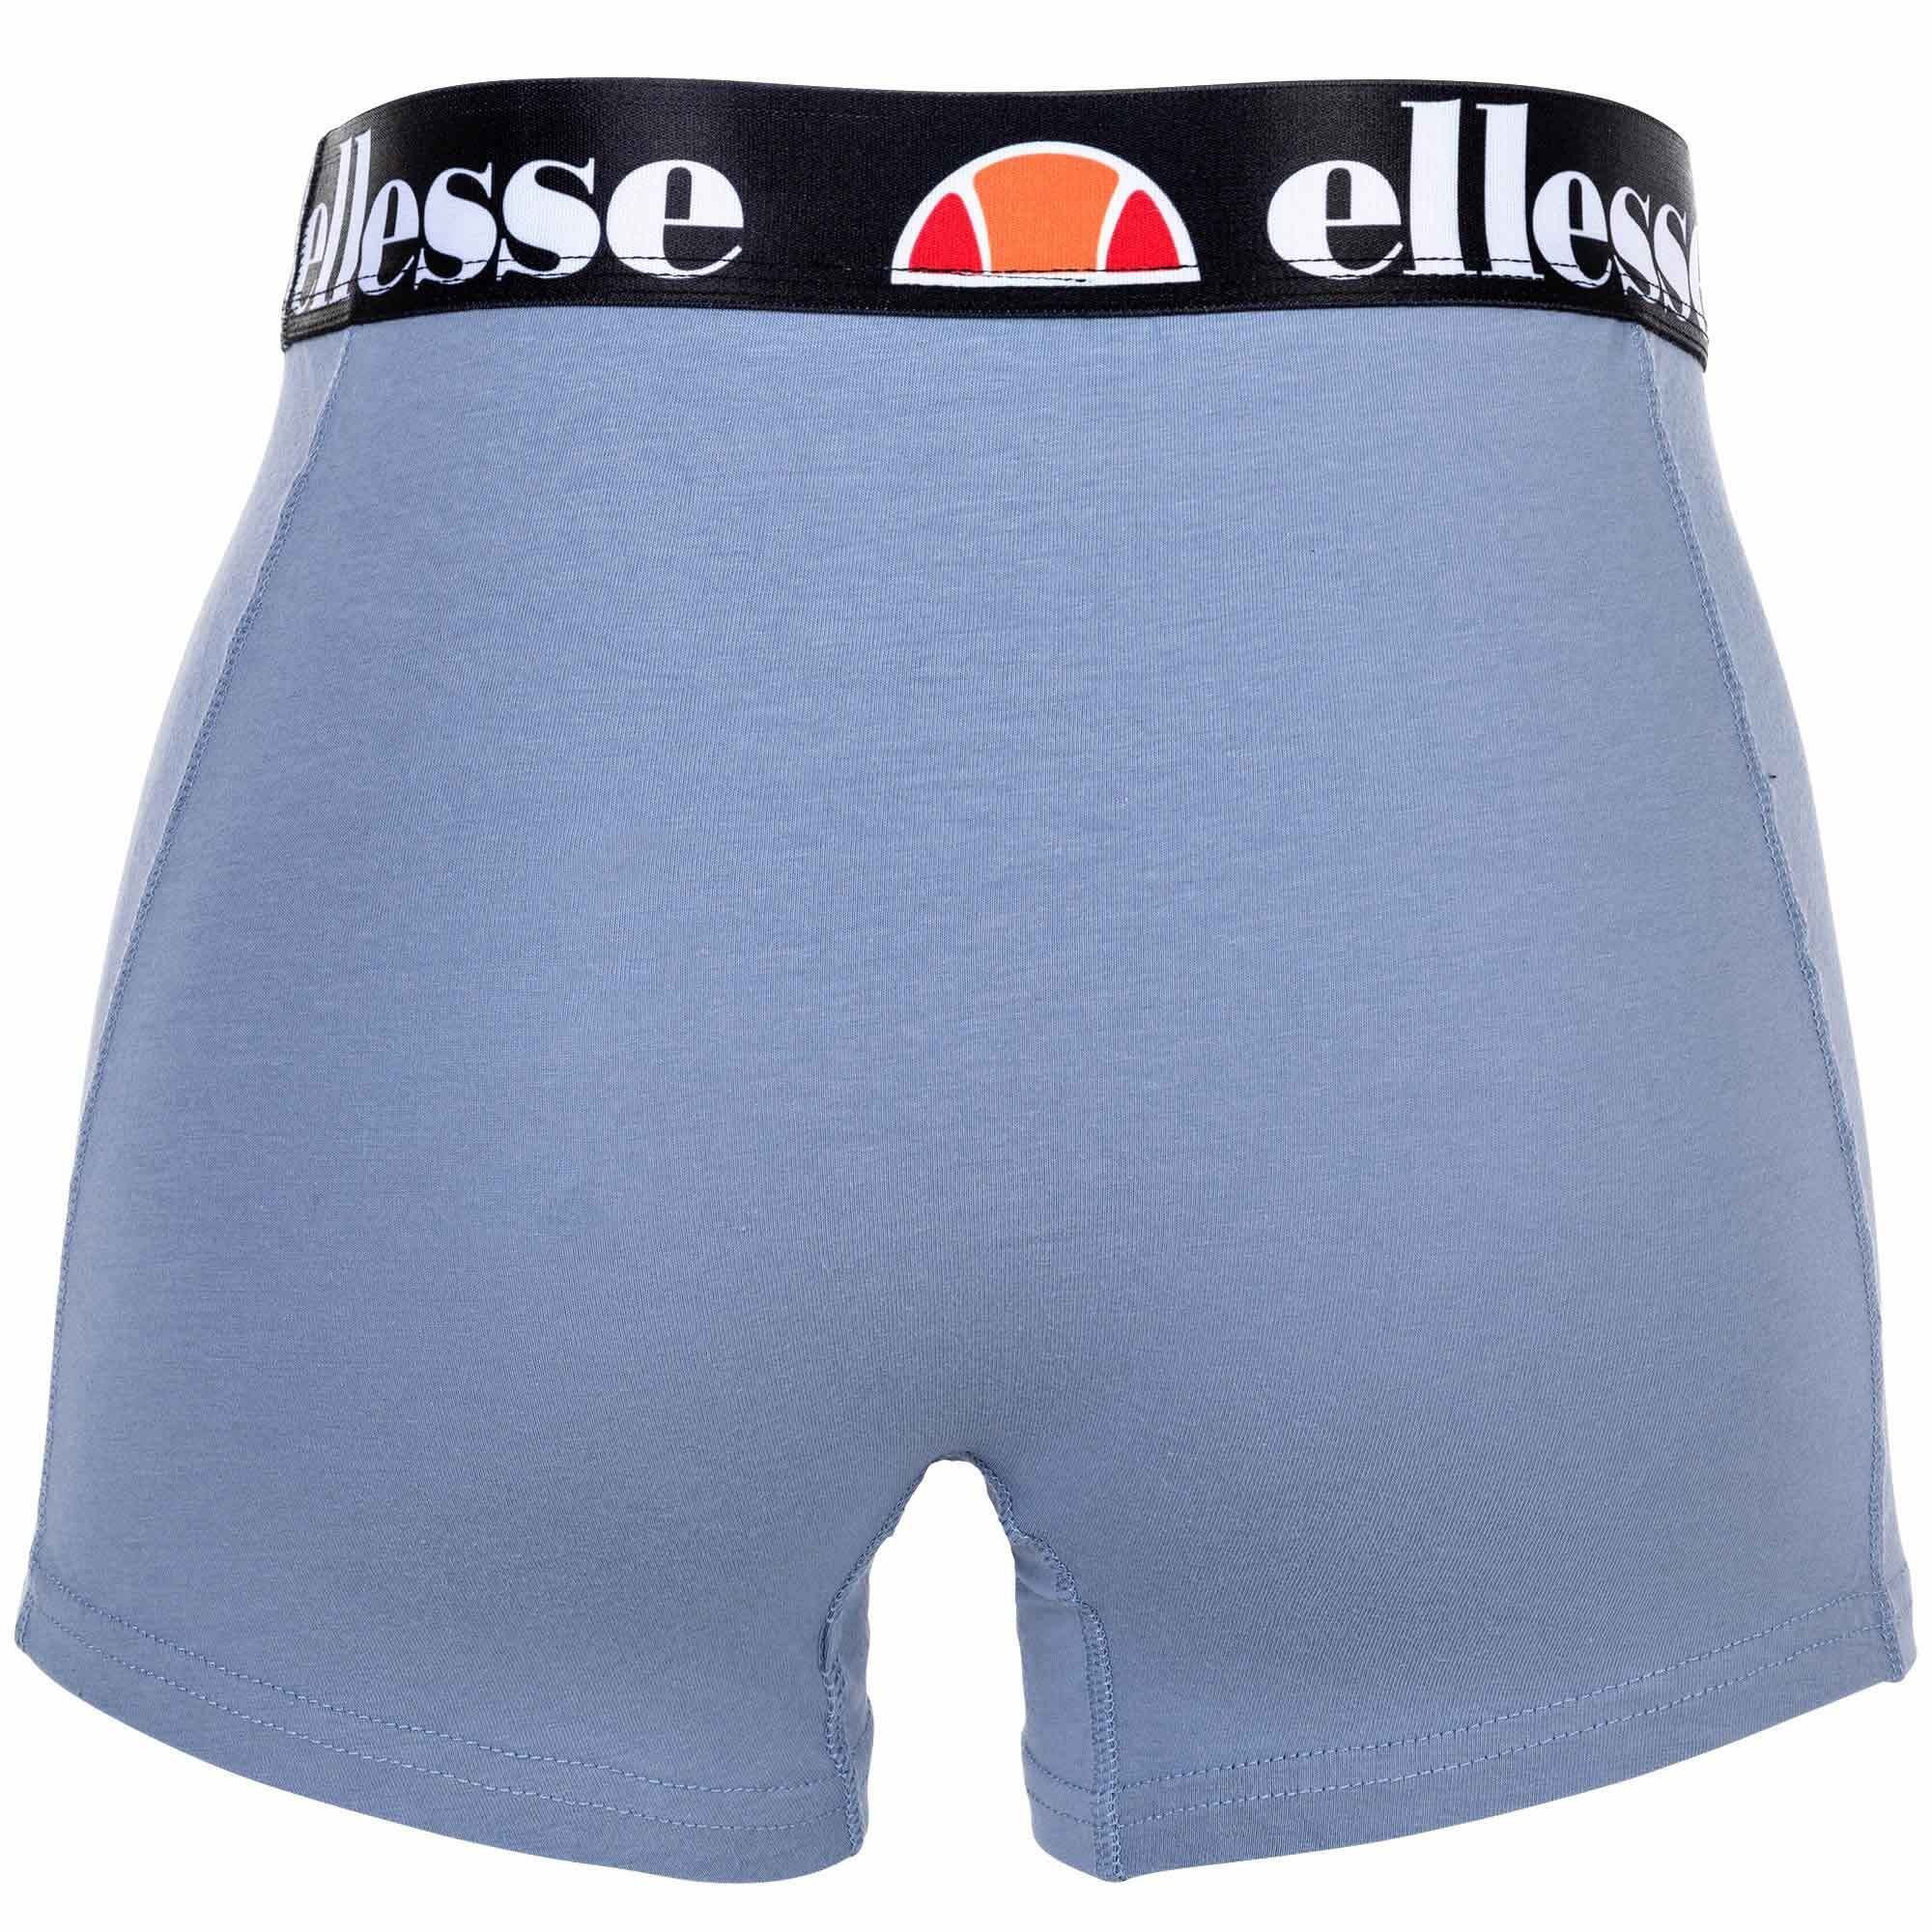 Herren Shorts - Fashion Boxer Pack Ellesse 3er GRILLO, Schwarz/Grün/Blau Boxer